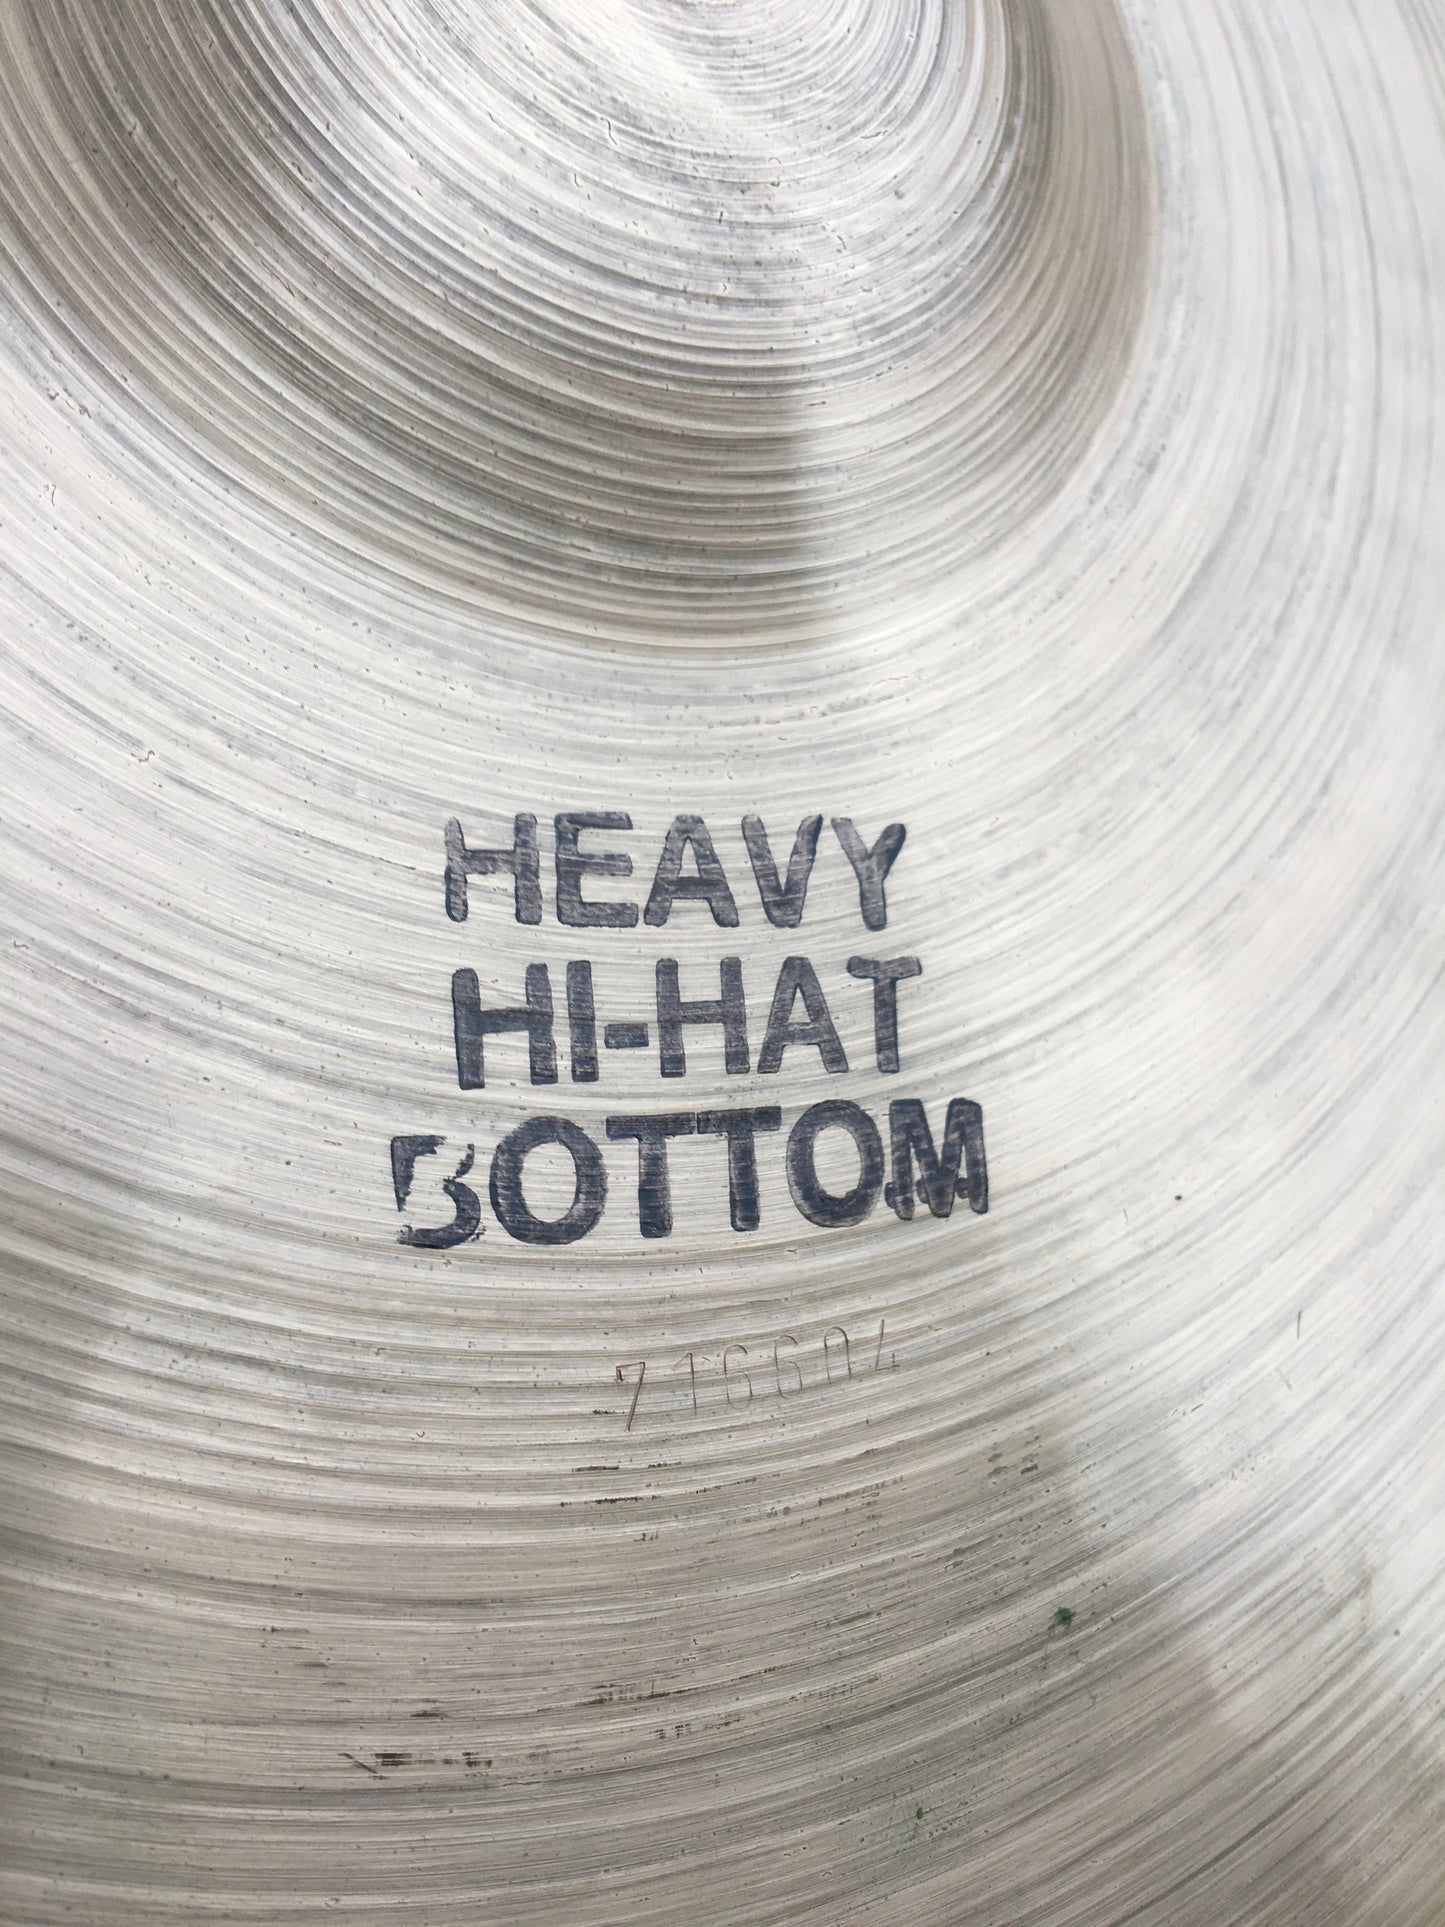 14" Paiste 1977 2002 Heavy Hi-Hat Cymbal Pair 988/1058g